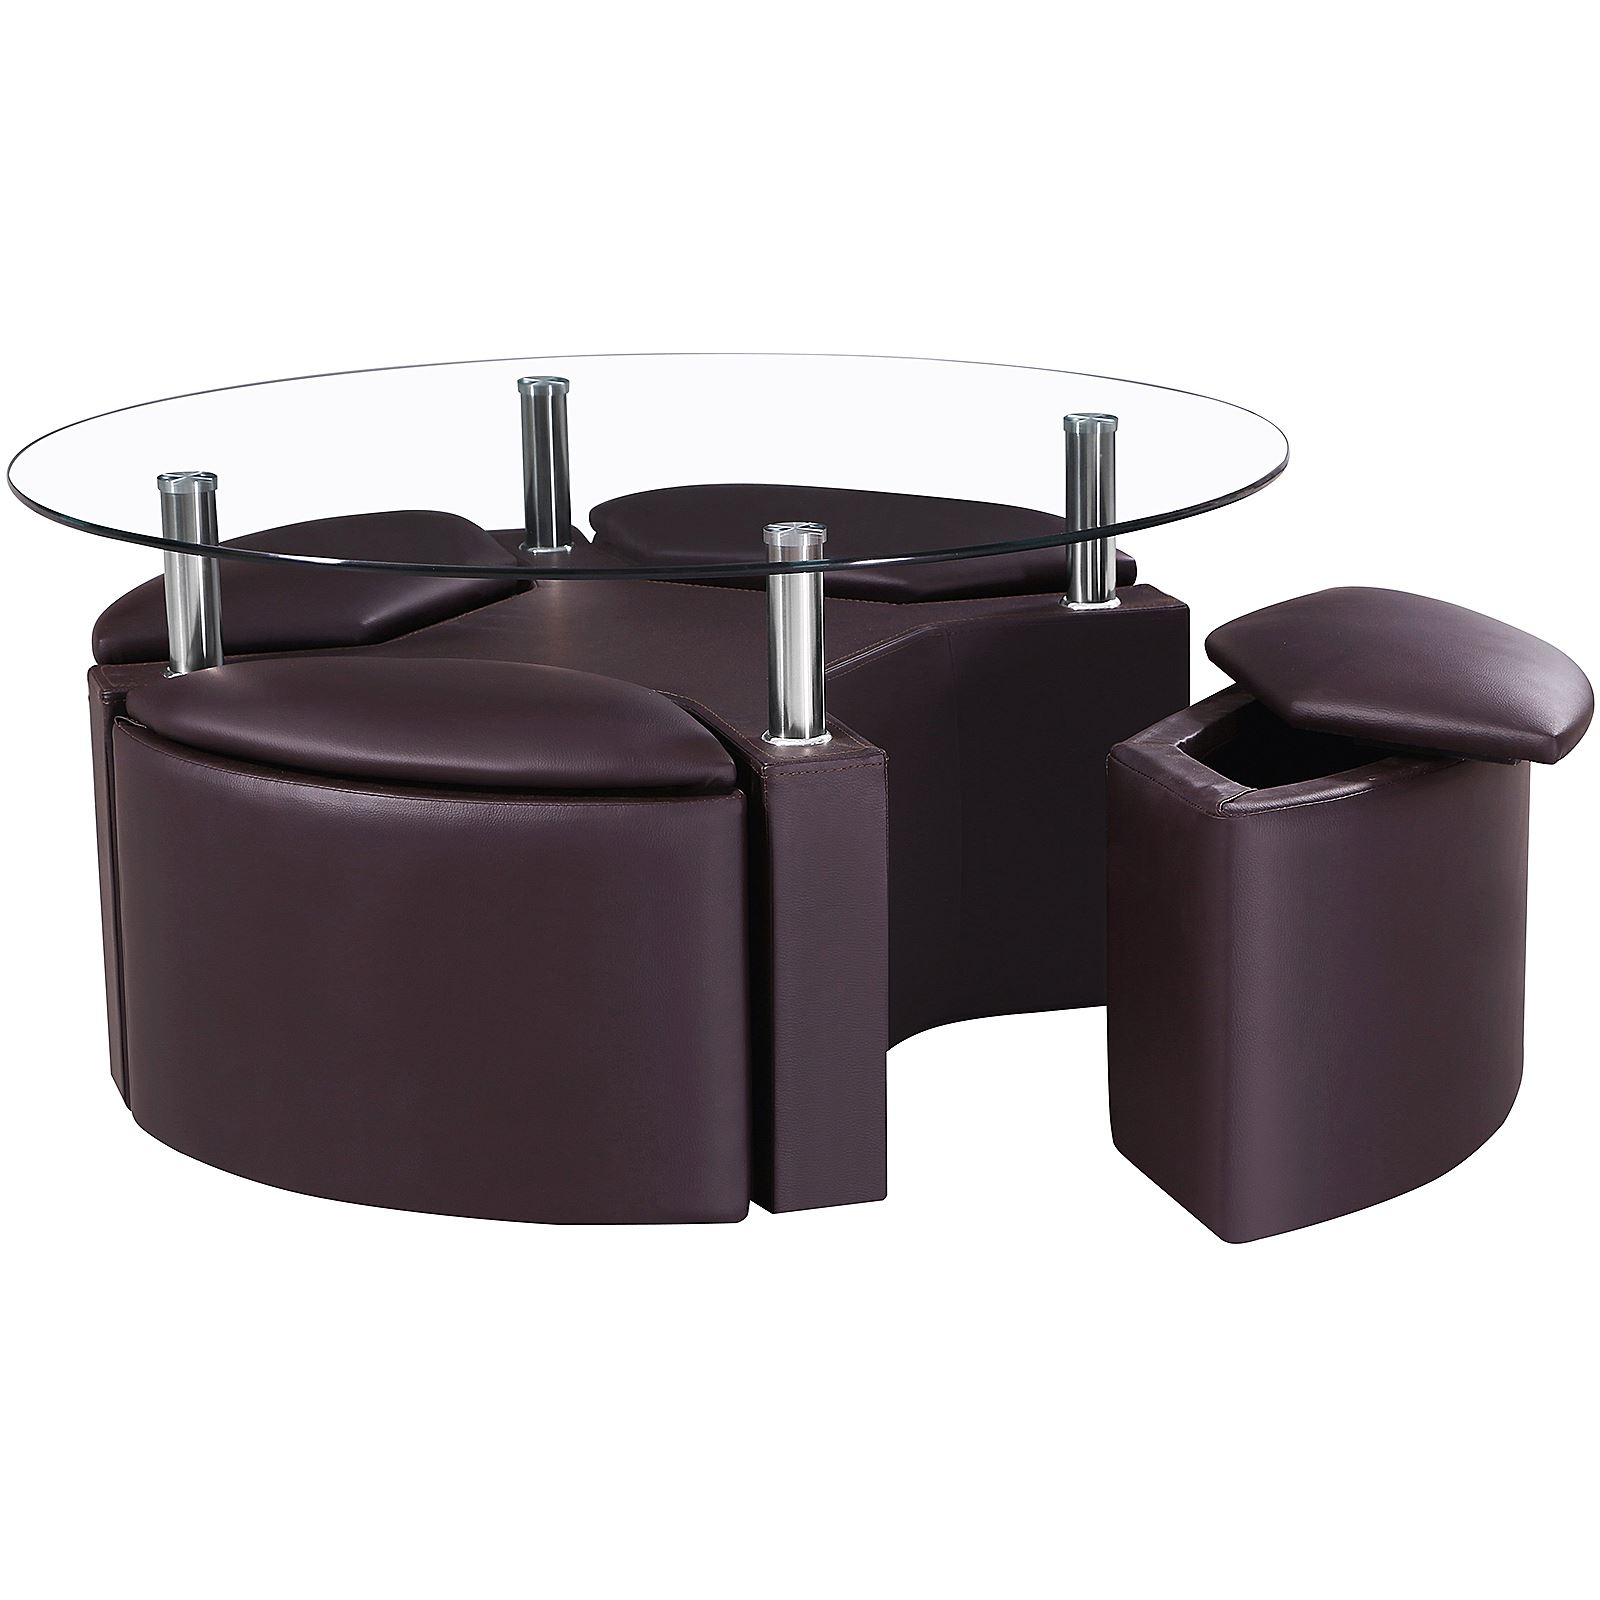 Round chrome glass coffee table with 4 ottoman storage stools